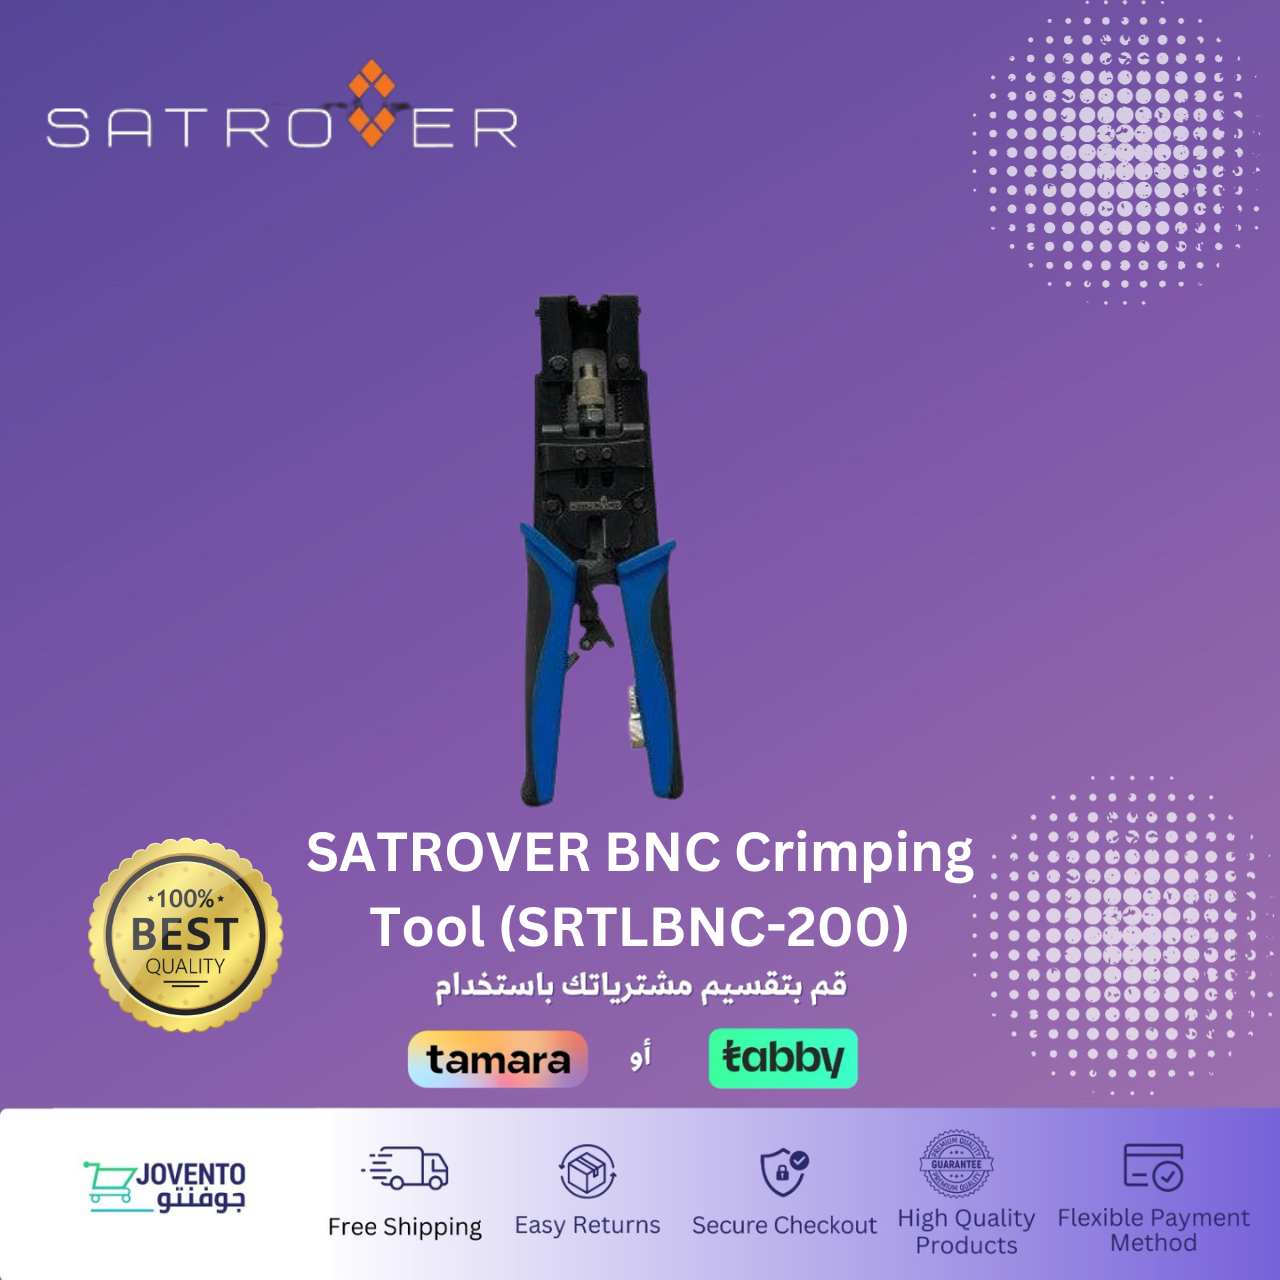 SATROVER BNC Crimping Tool (SRTLBNC-200)